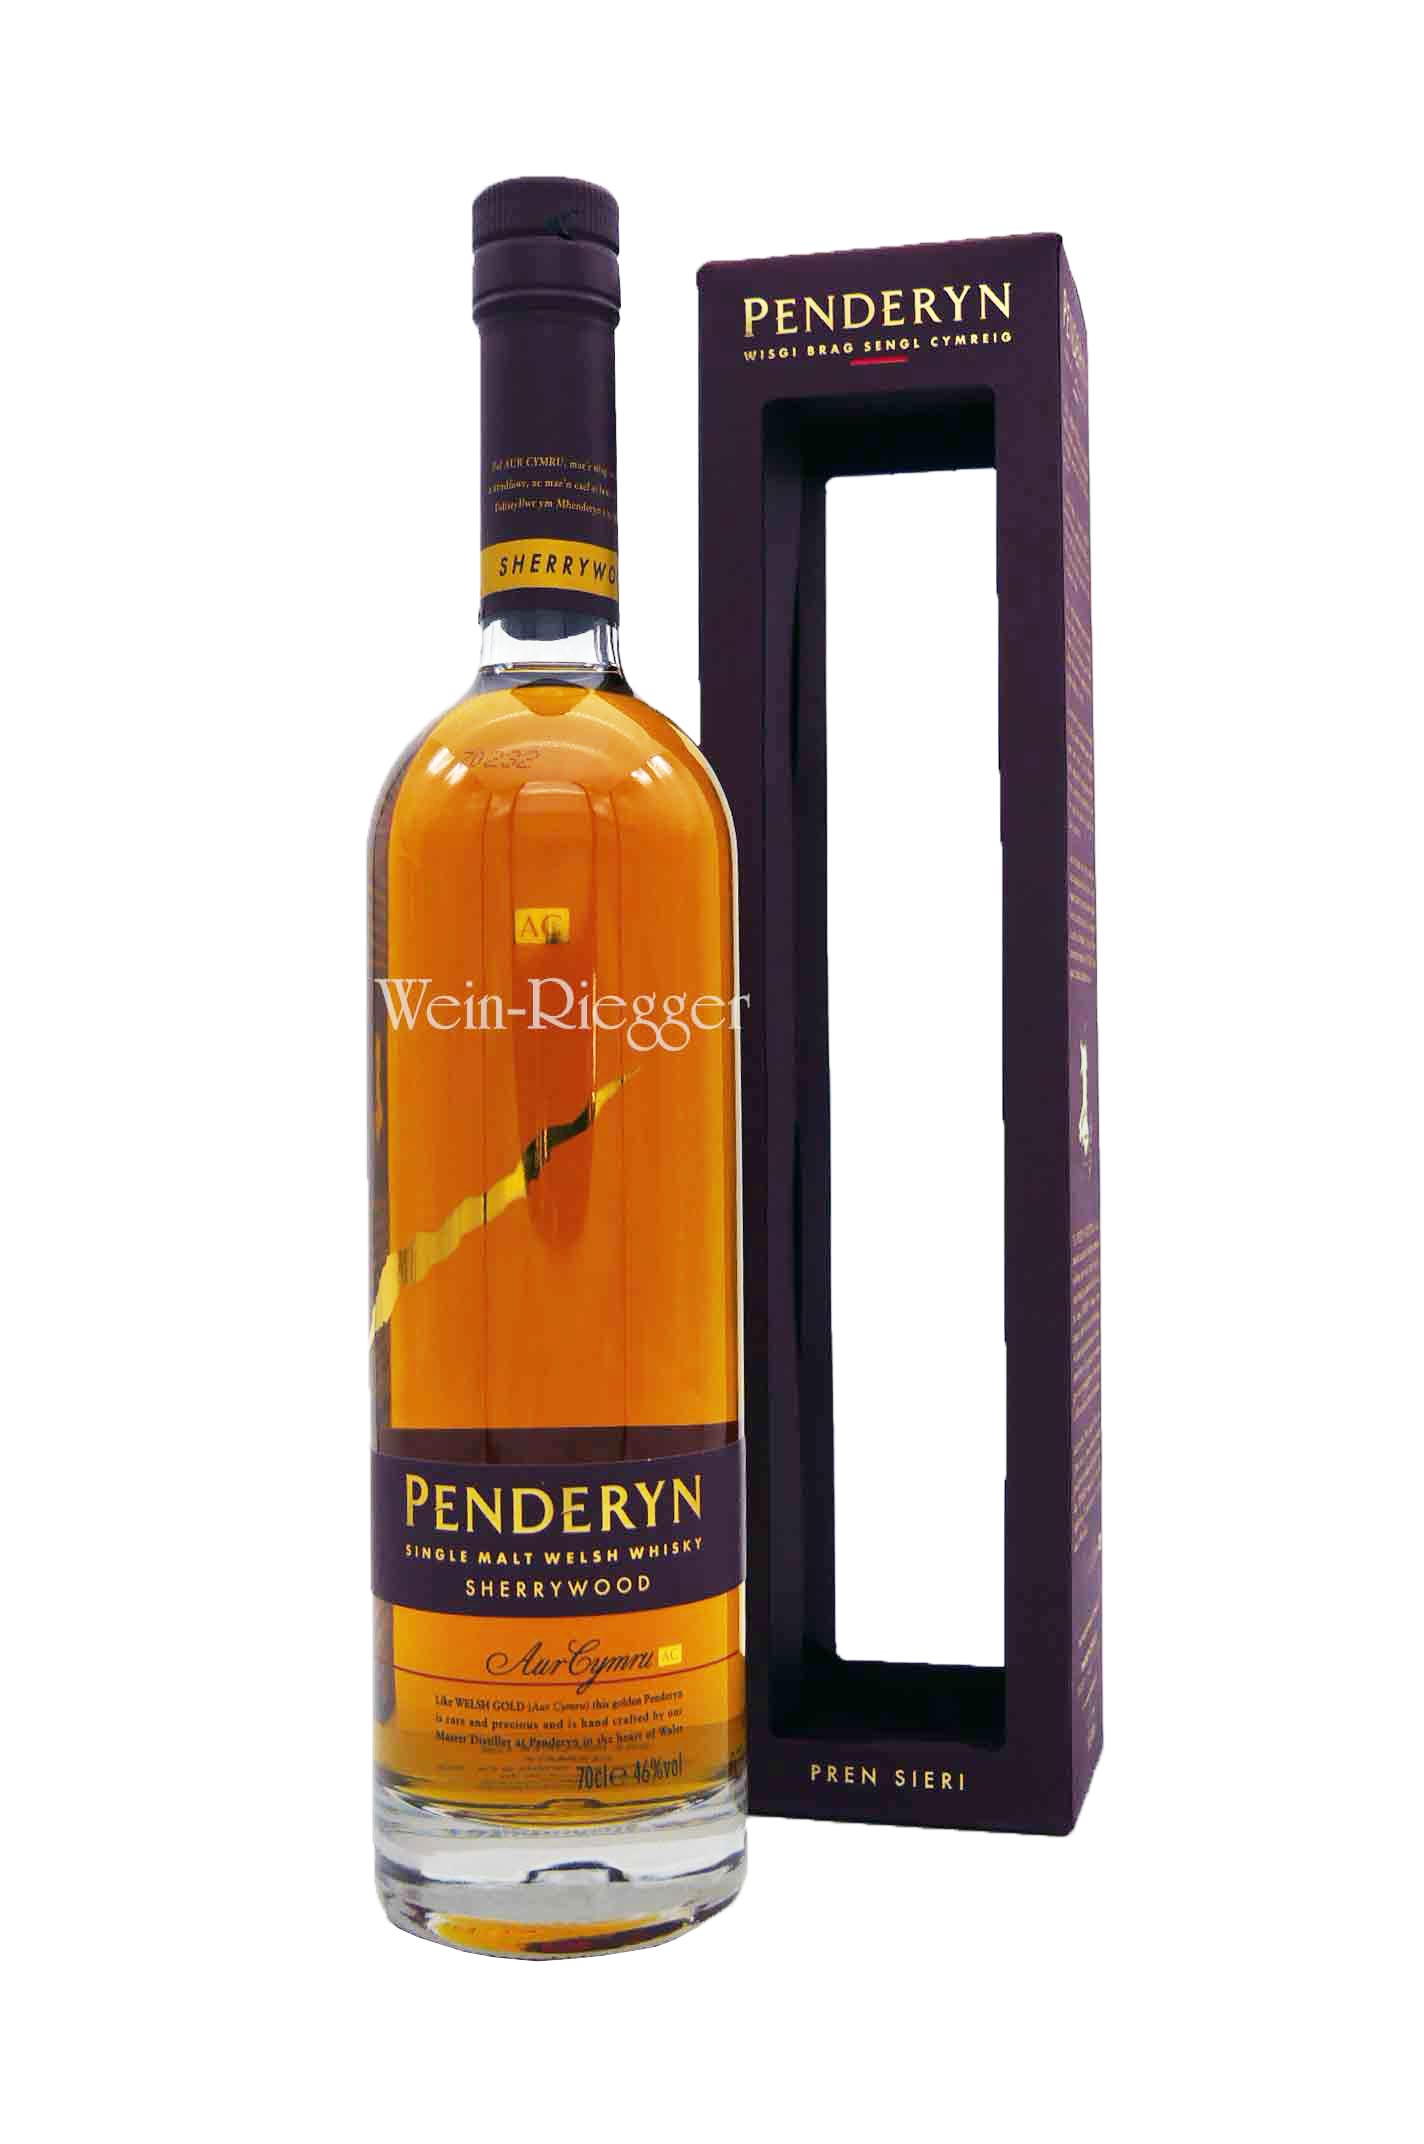 Penderyn Sherrywood Single Malt Whisky (Wales)